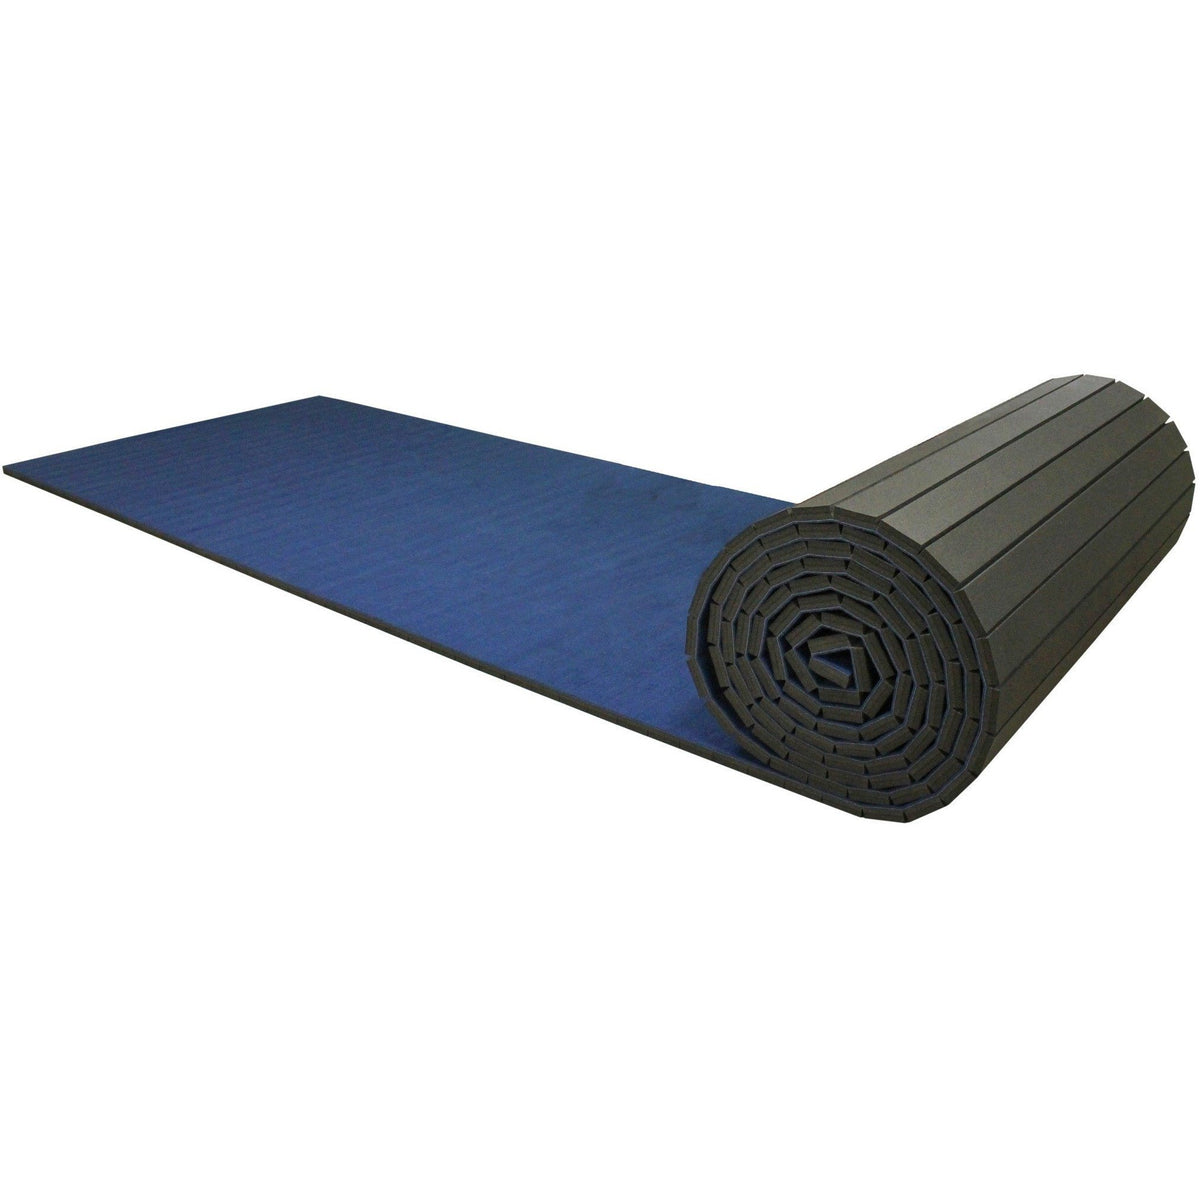 12 metre Cannons UK Rollaway Gymnastics Wrestling Martial Arts Mat Carpet Top Blue or Black - Cannons UK